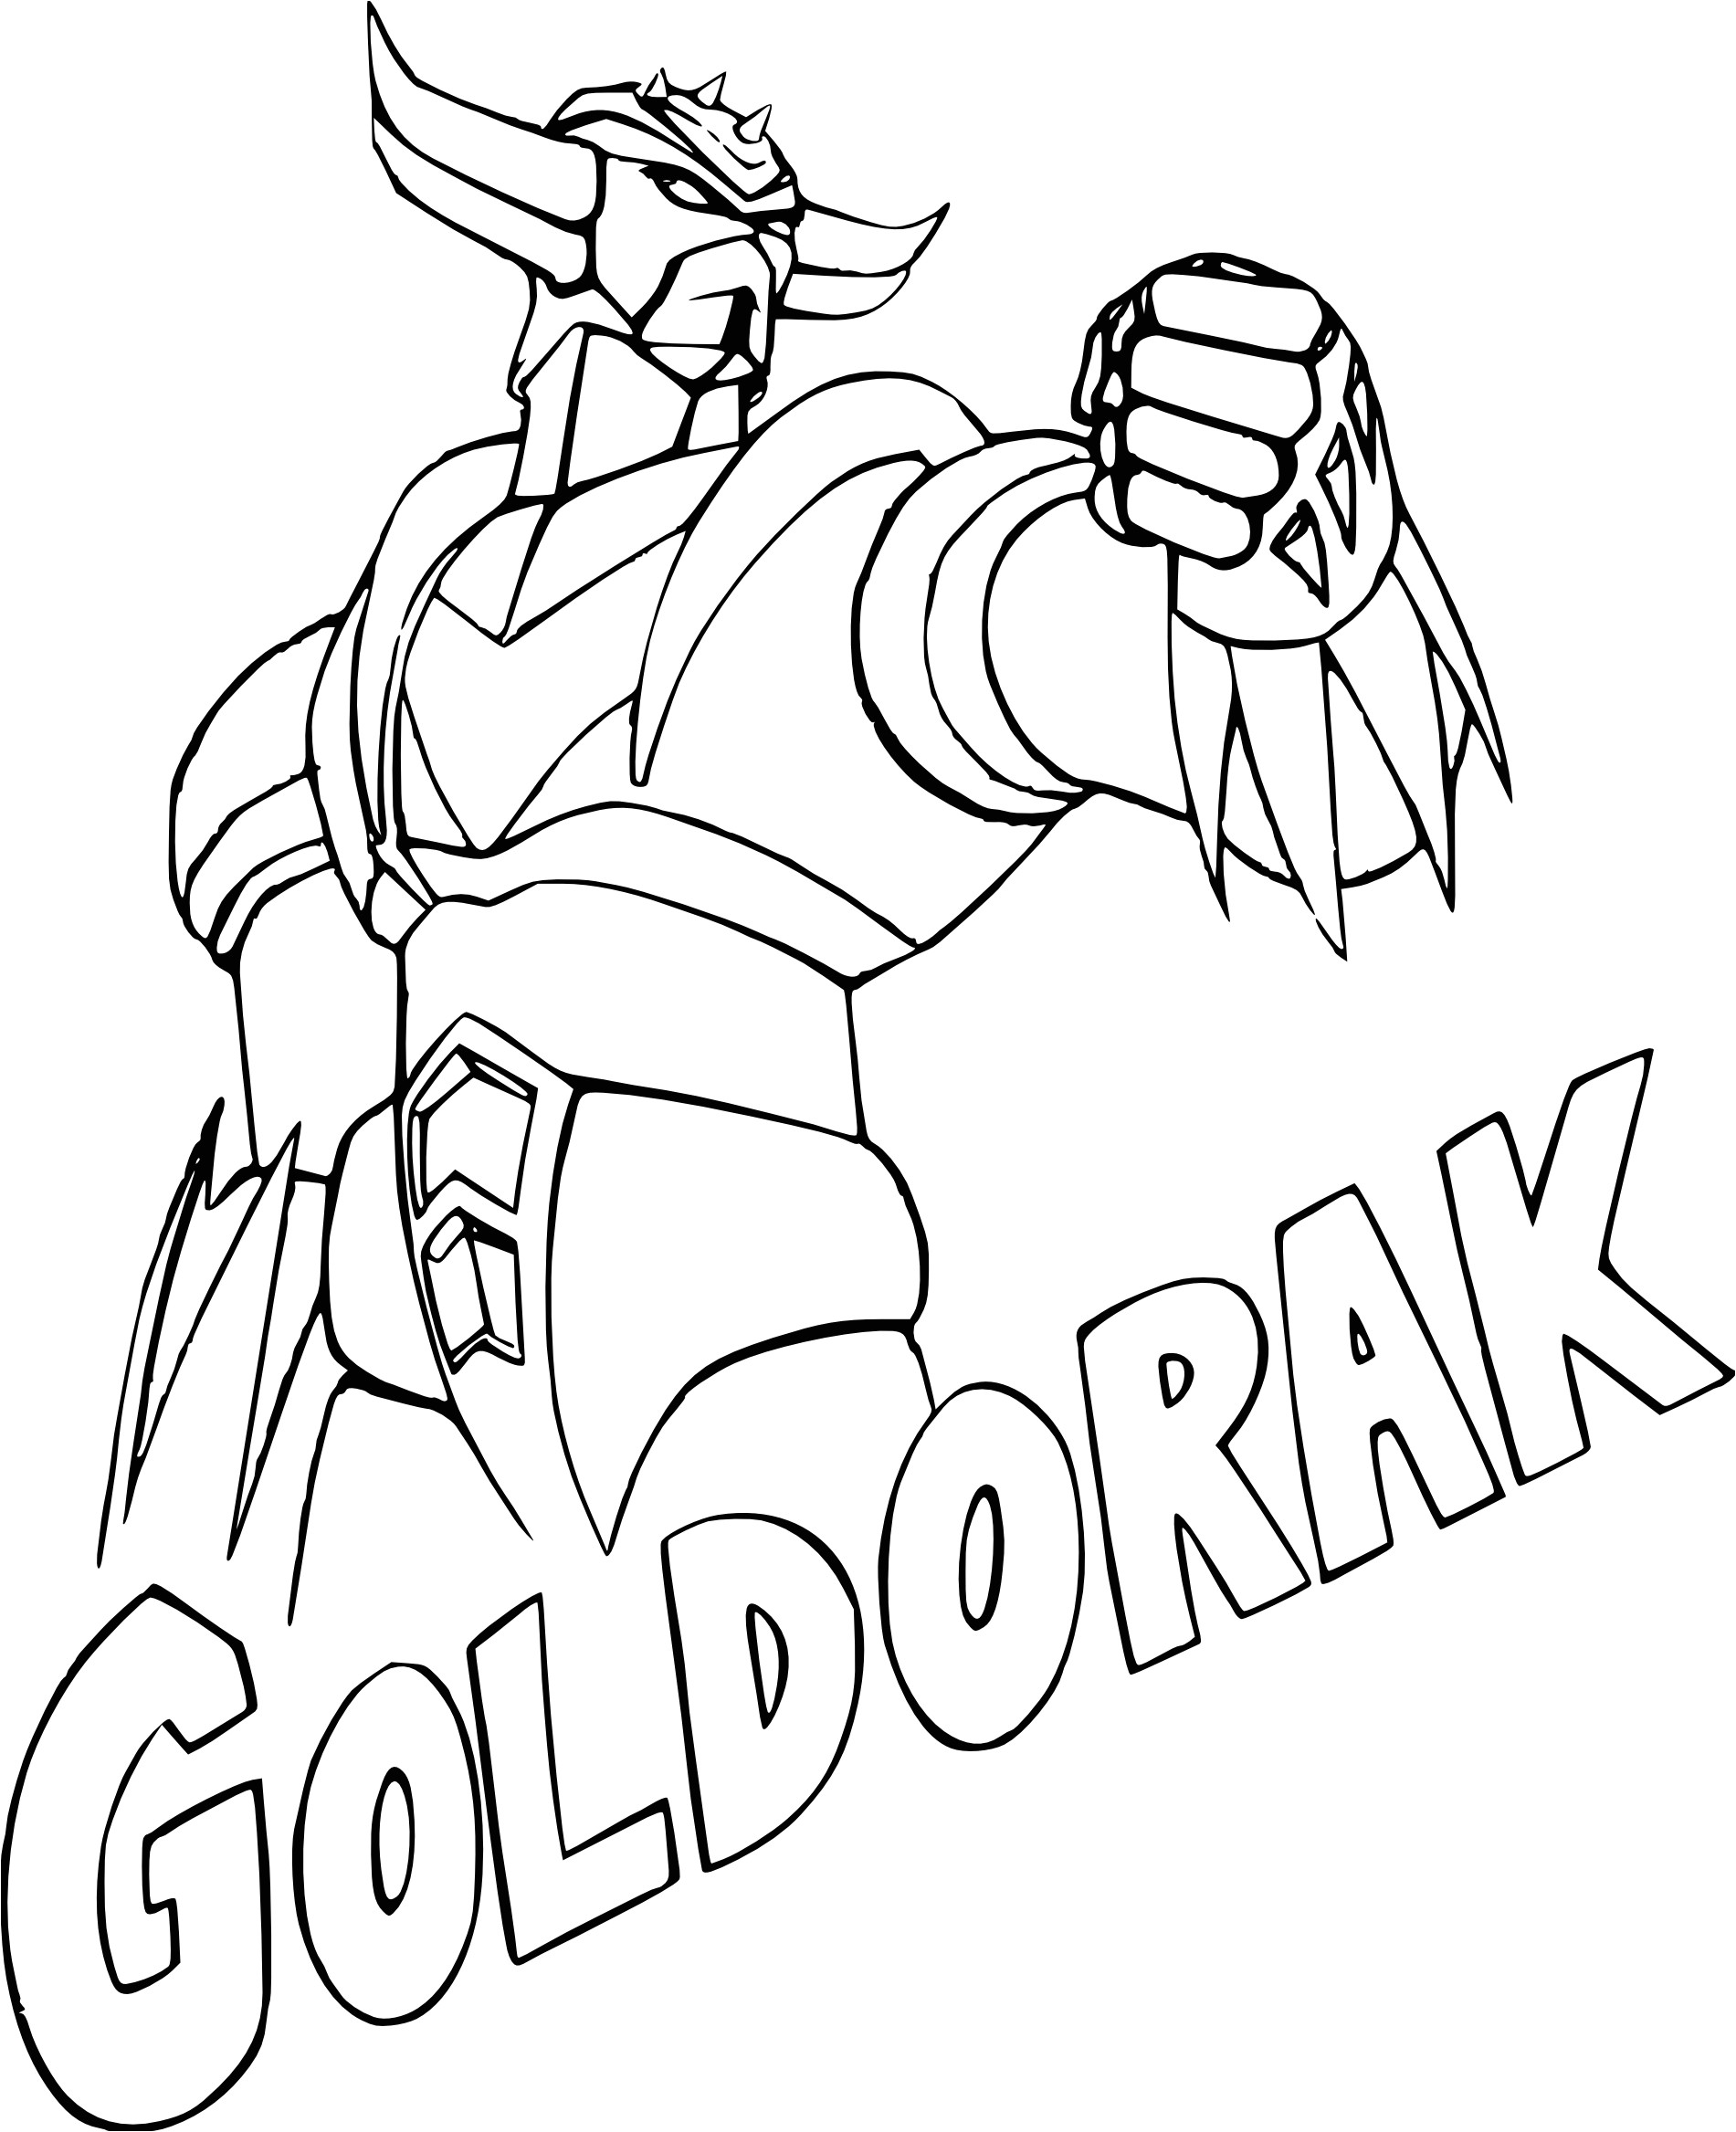 Dessins Coloriage Goldorak Imprimer Coloriage Goldorak   Imprimer